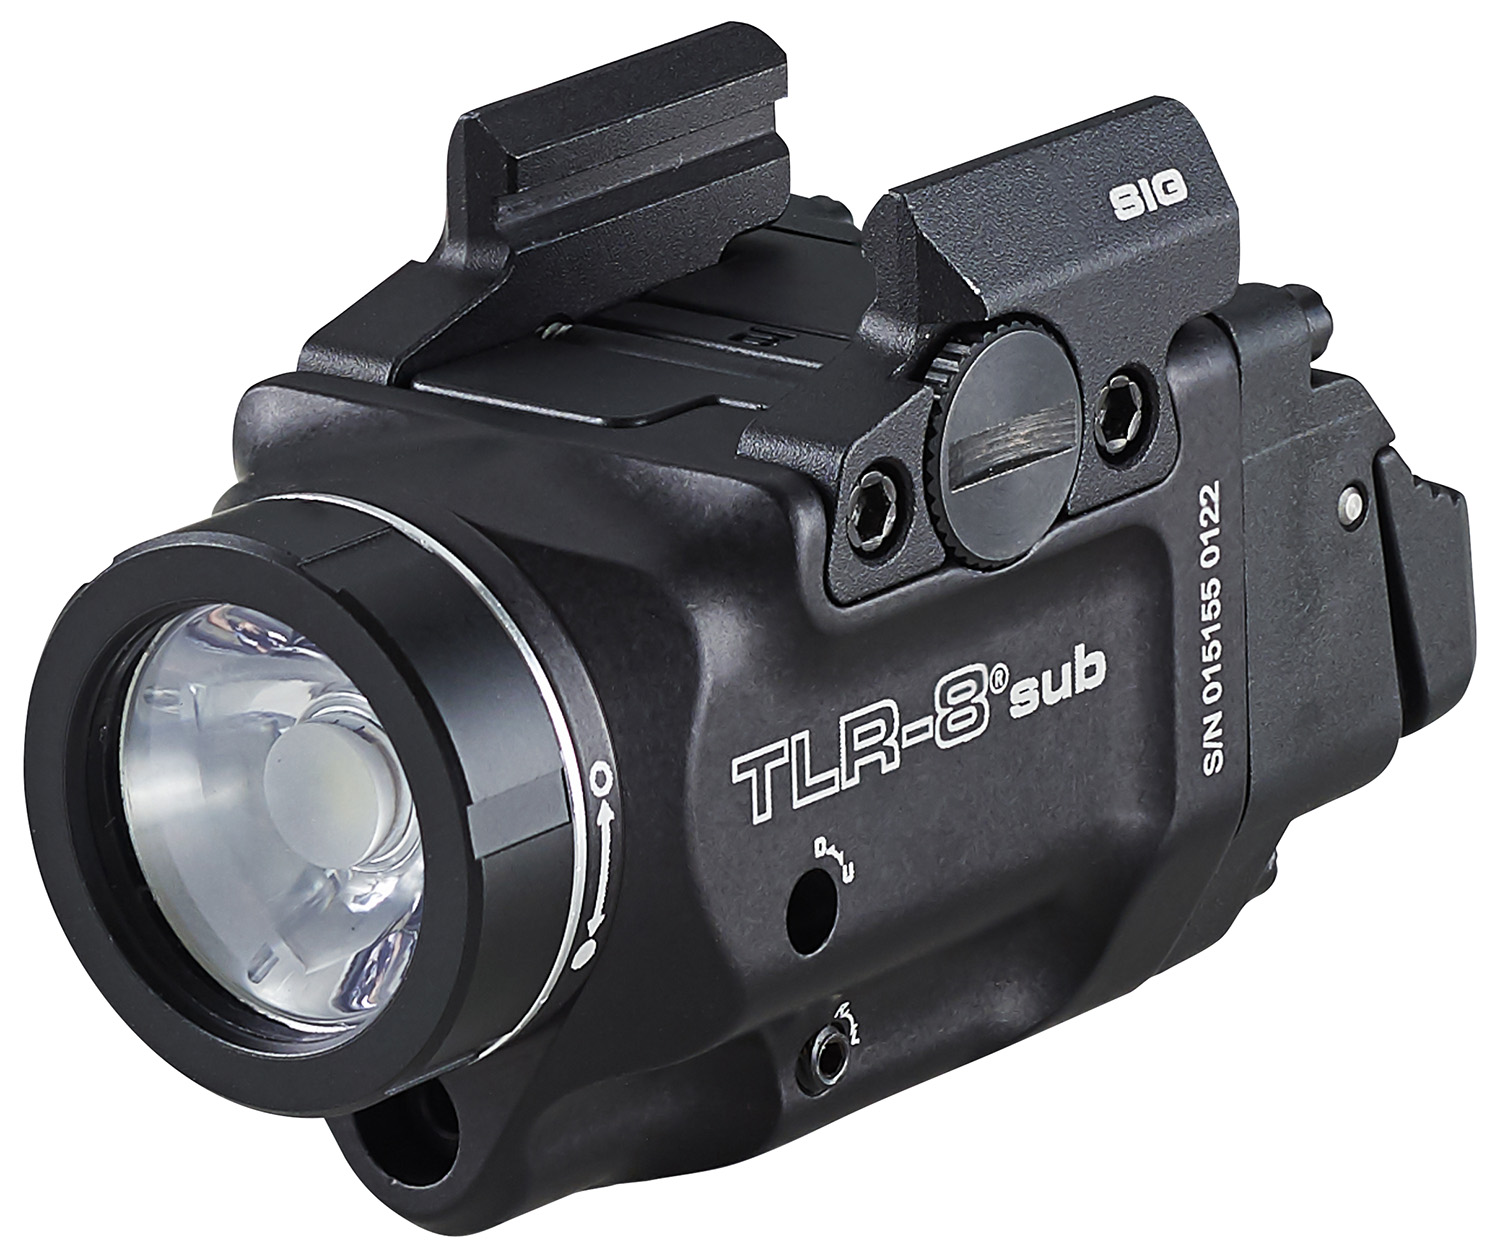 Streamlight 69417 TLR-8 Sub W/Laser Red Laser 500 Lumens, 640-660Nm Wavelength, Black 141 Meters Beam Distance, Fits Sig